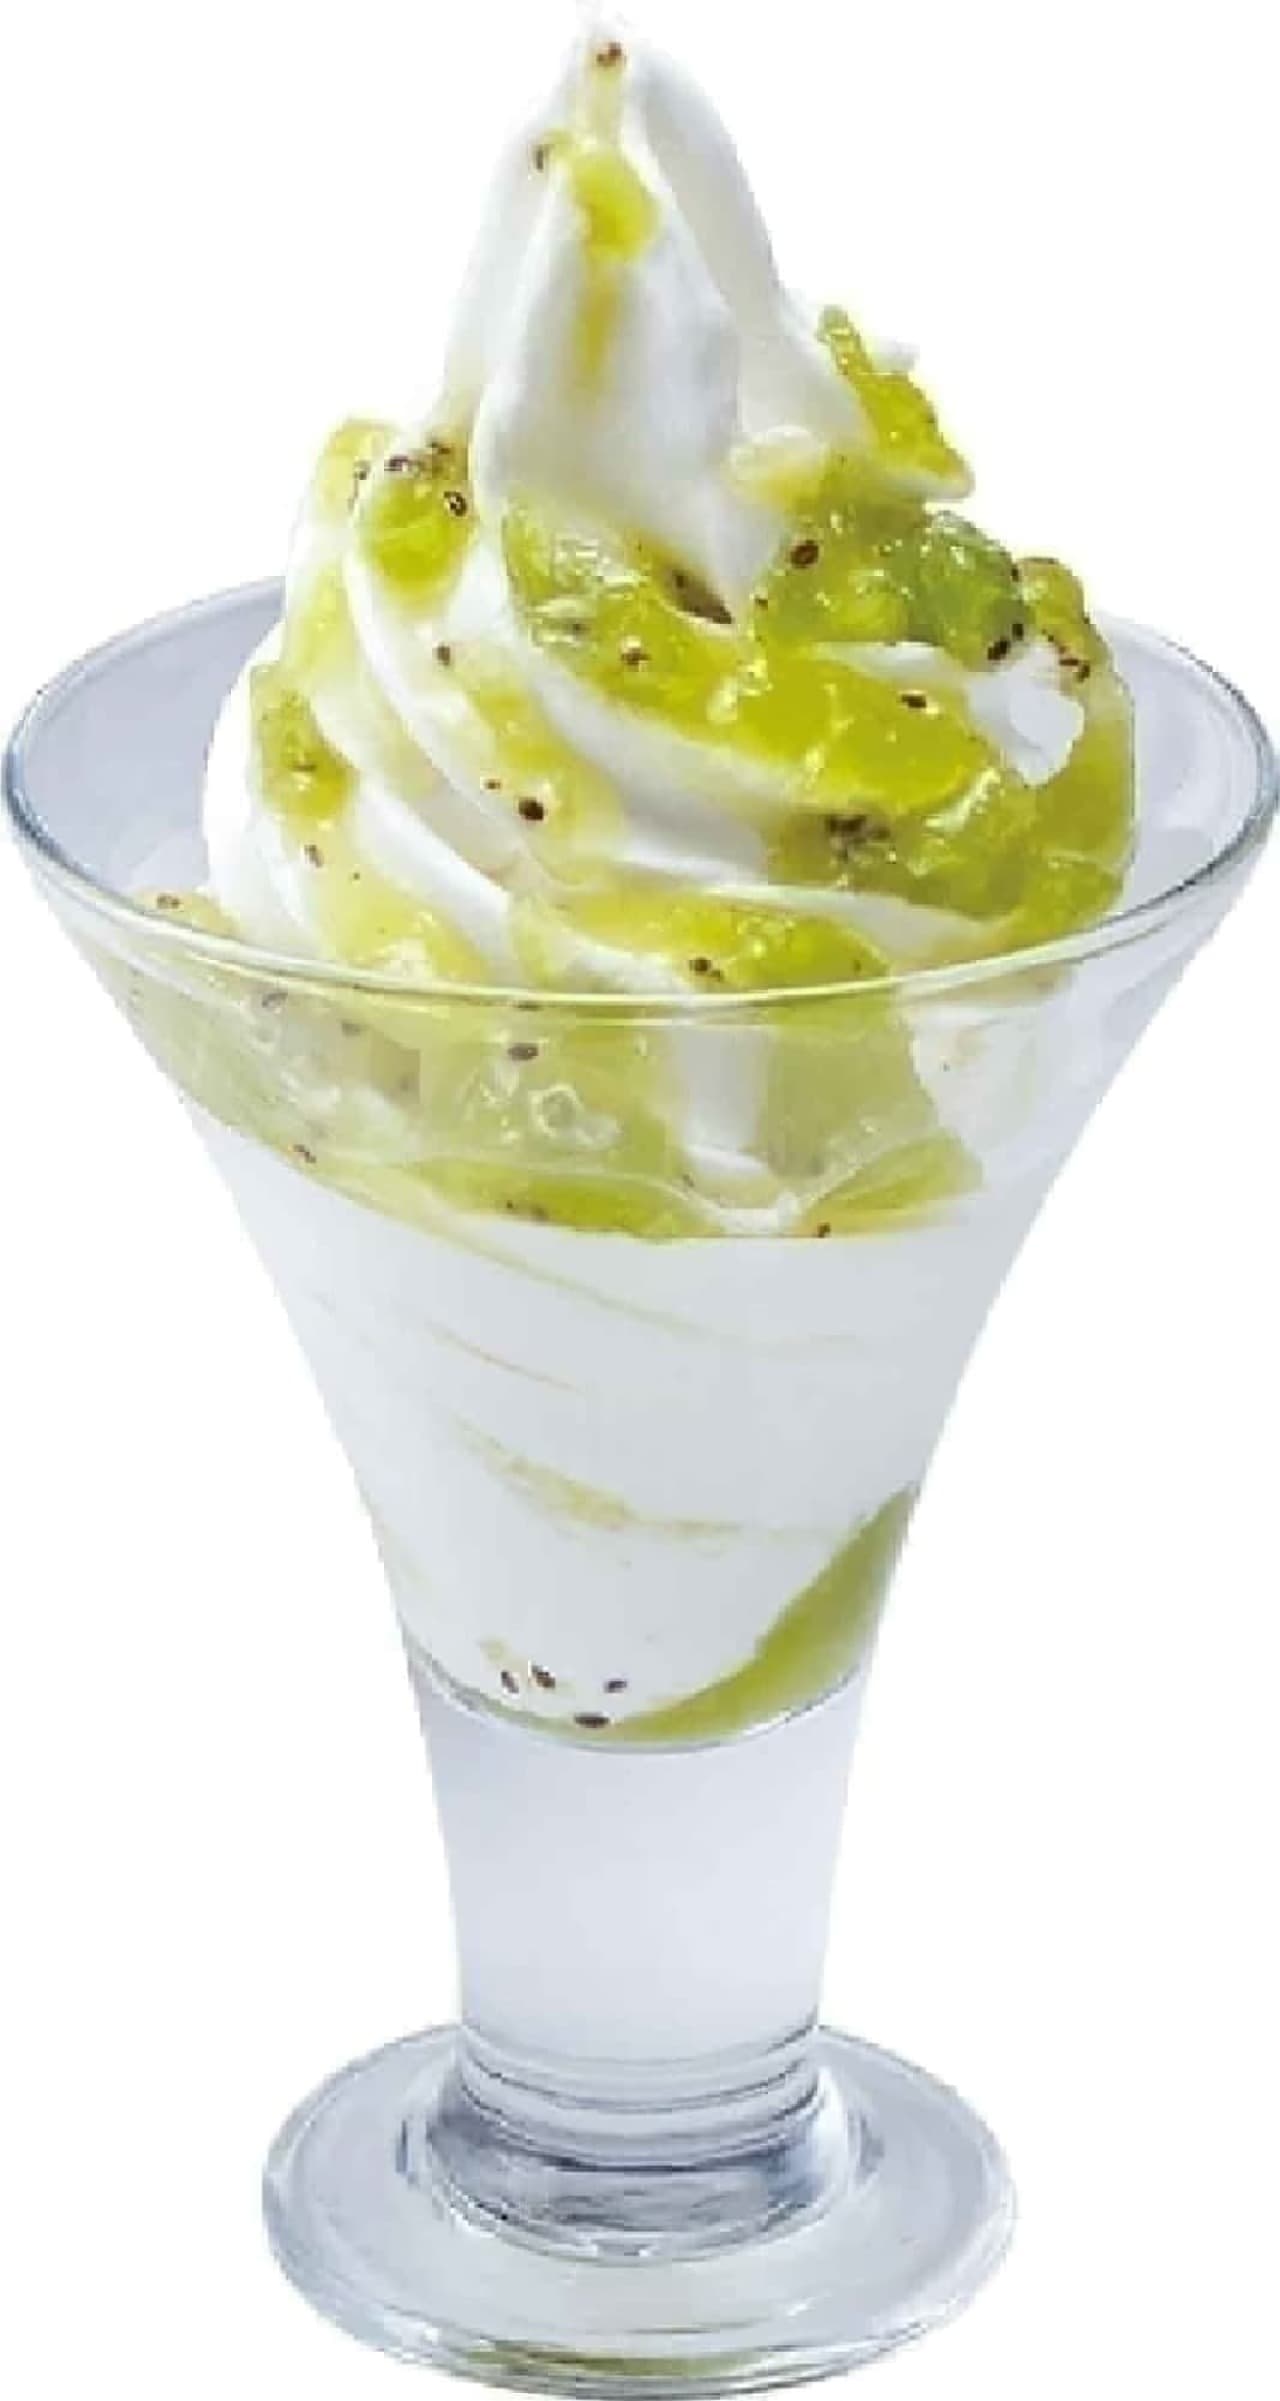 BIKKURI DONKEY "Hokkaido Soft Serve Ice Cream with Kiwi Sauce